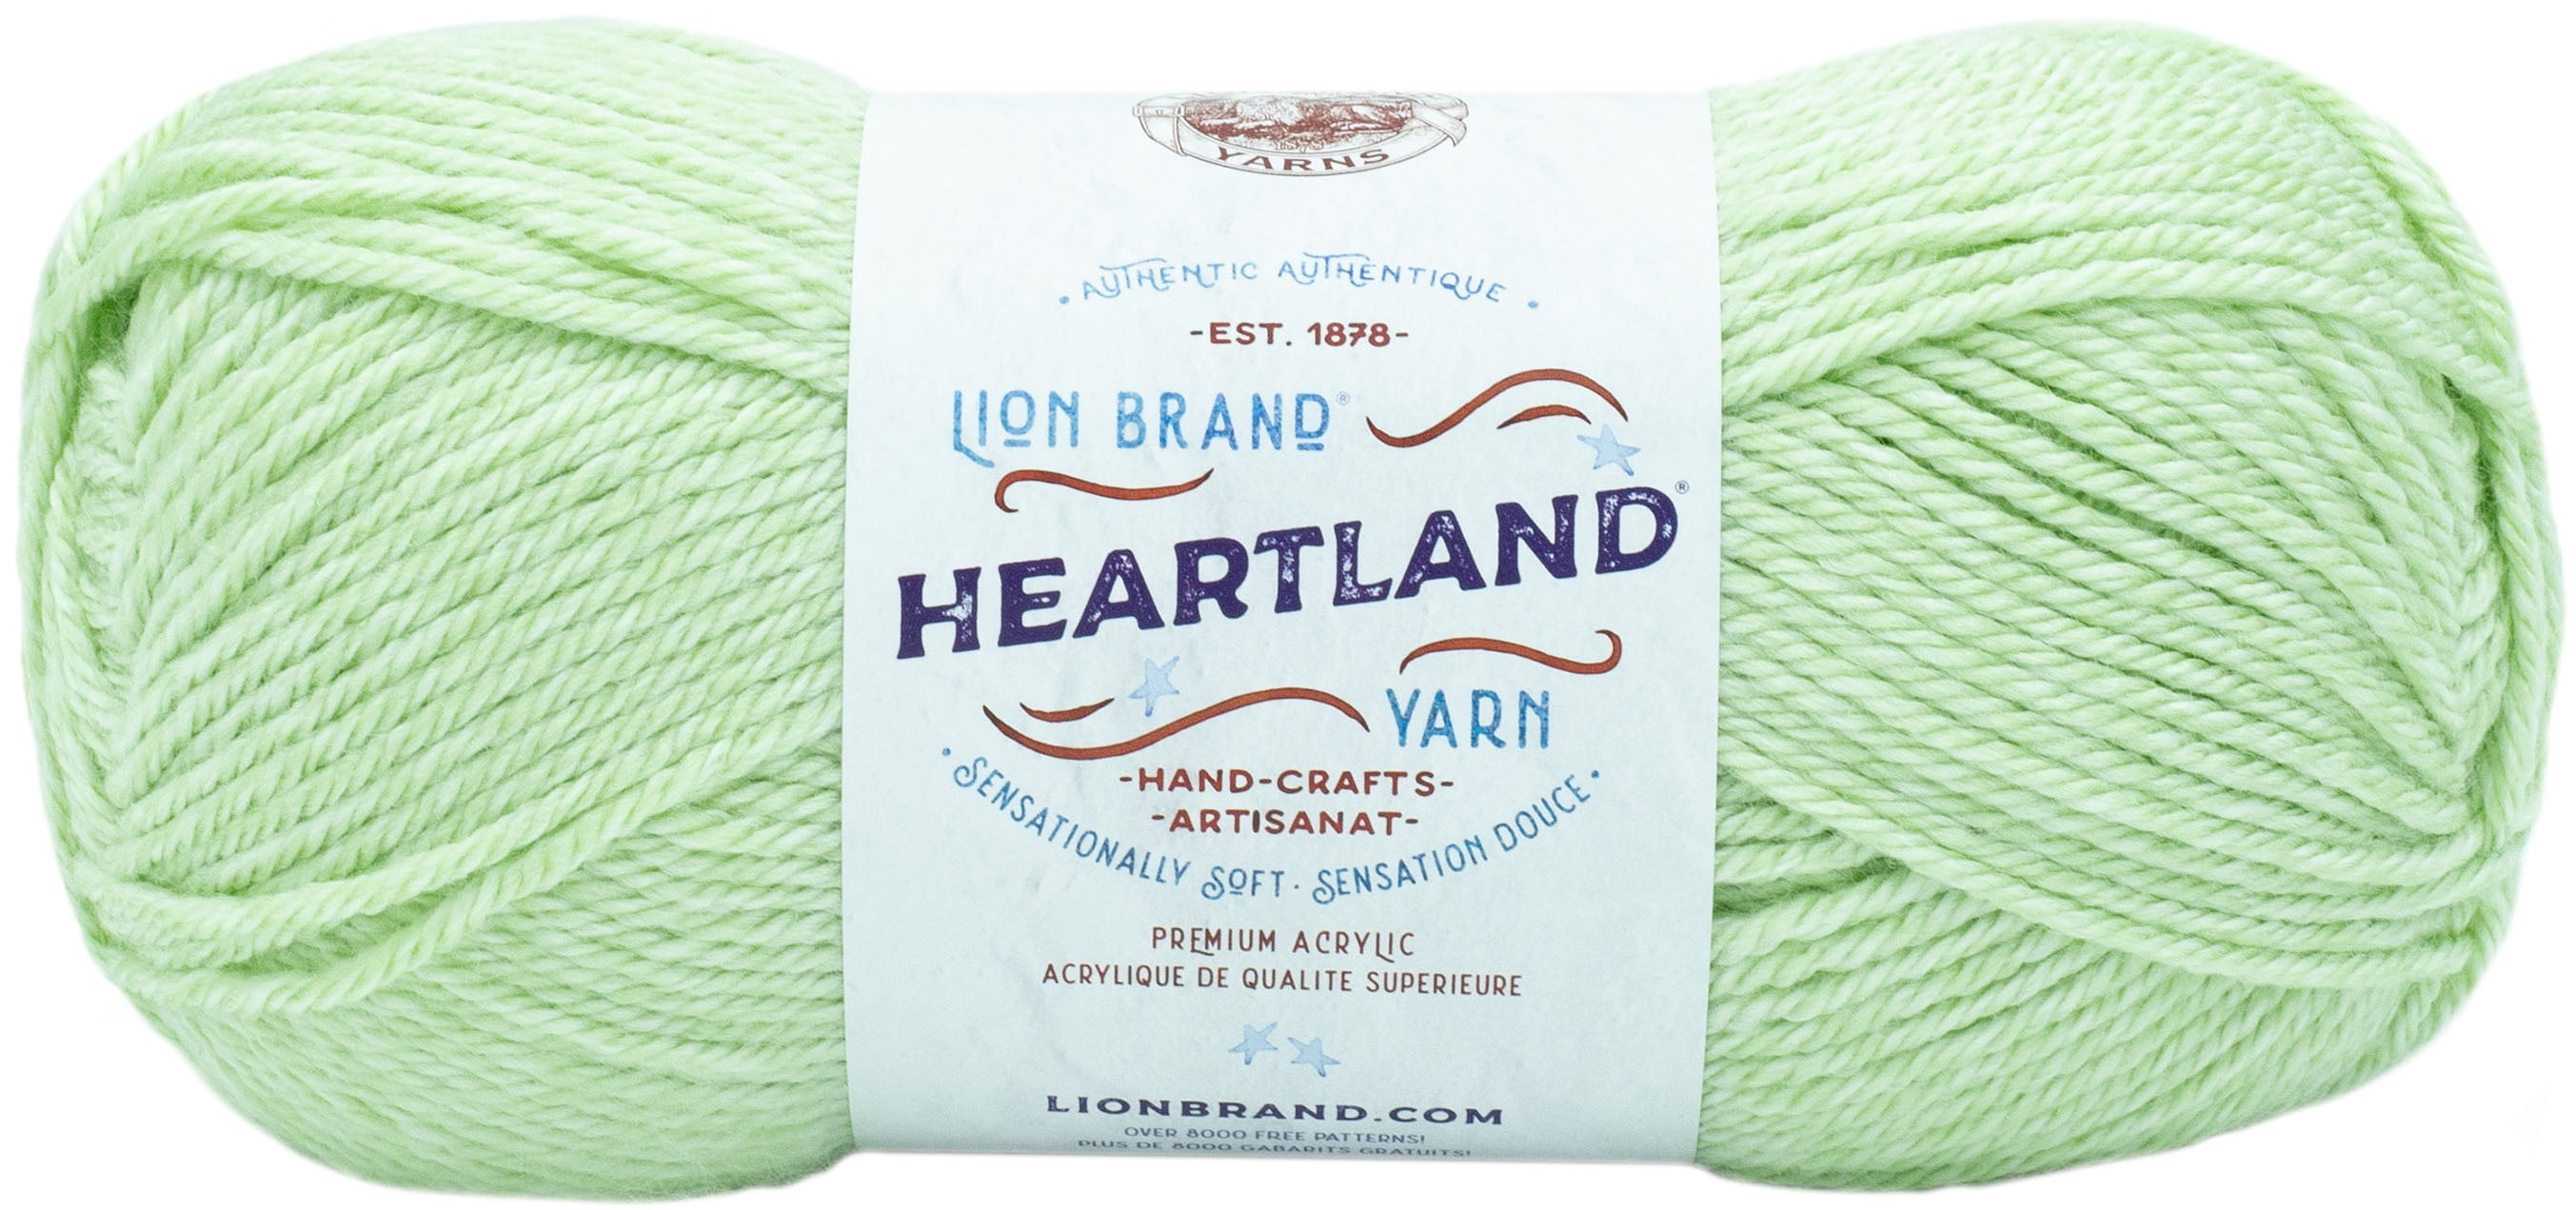 Lion Brand Heartland Yarn-Channel Islands 